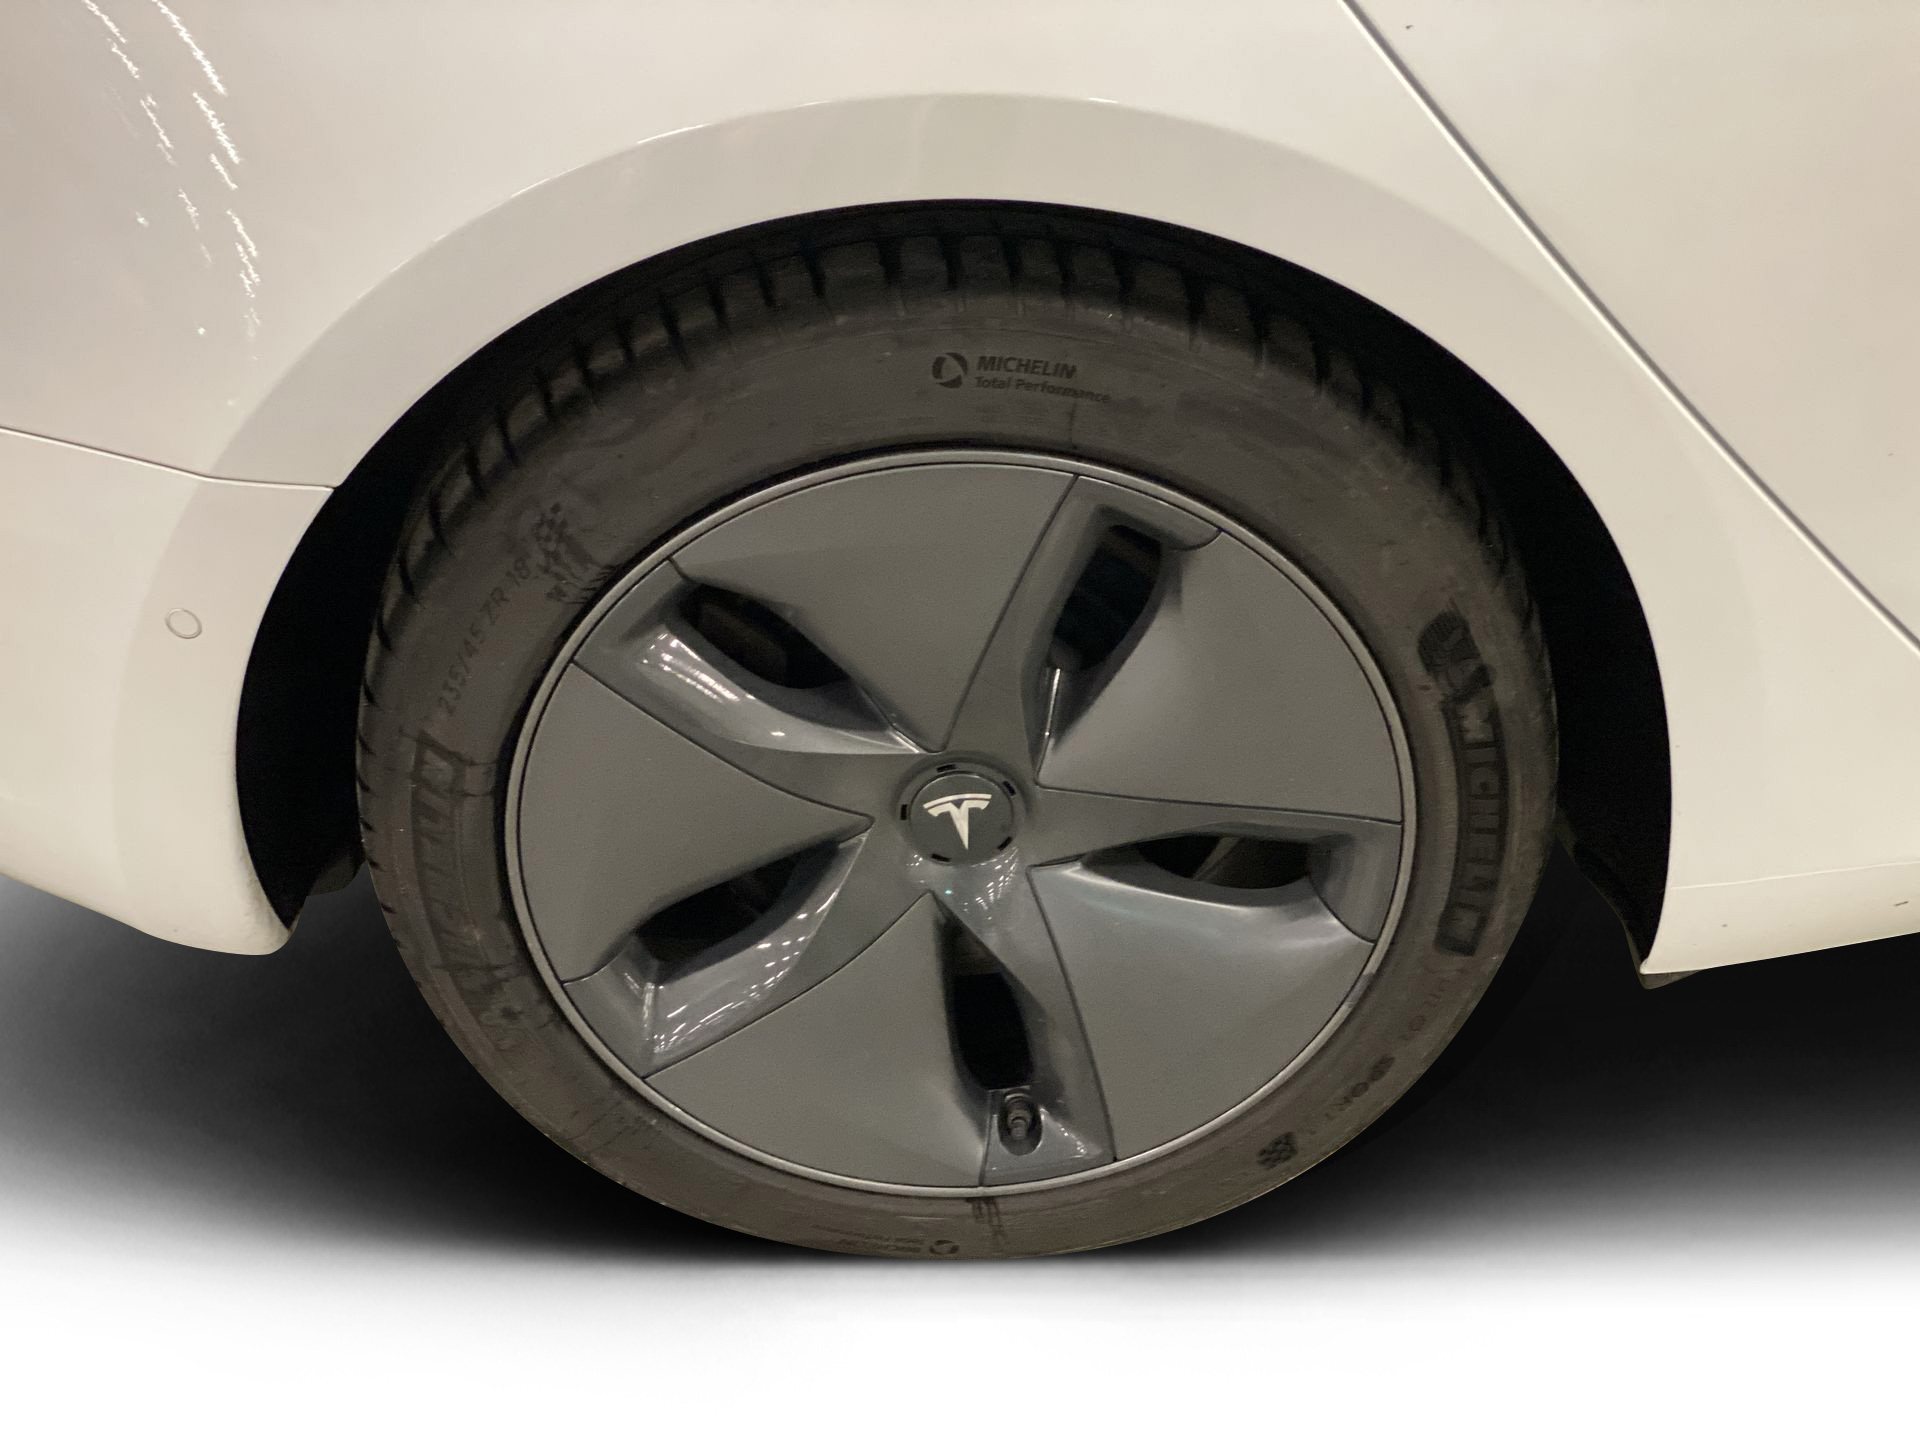 Details for a Passenger Side Rear Wheel & Tire